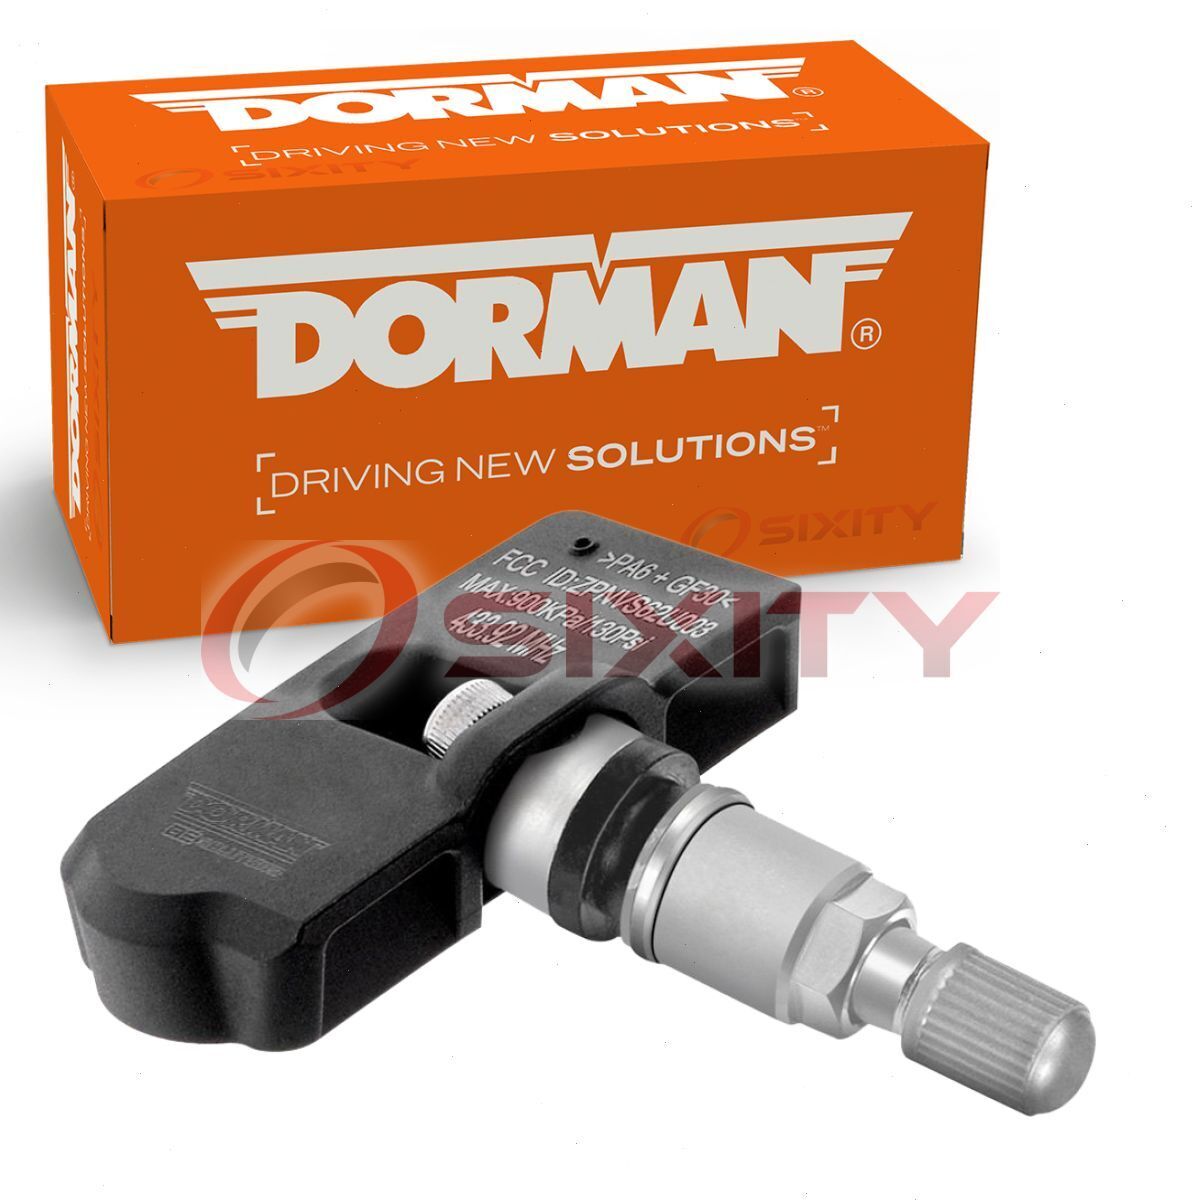 Dorman TPMS Programmable Sensor for 2014 BMW 535d xDrive Tire Pressure vo